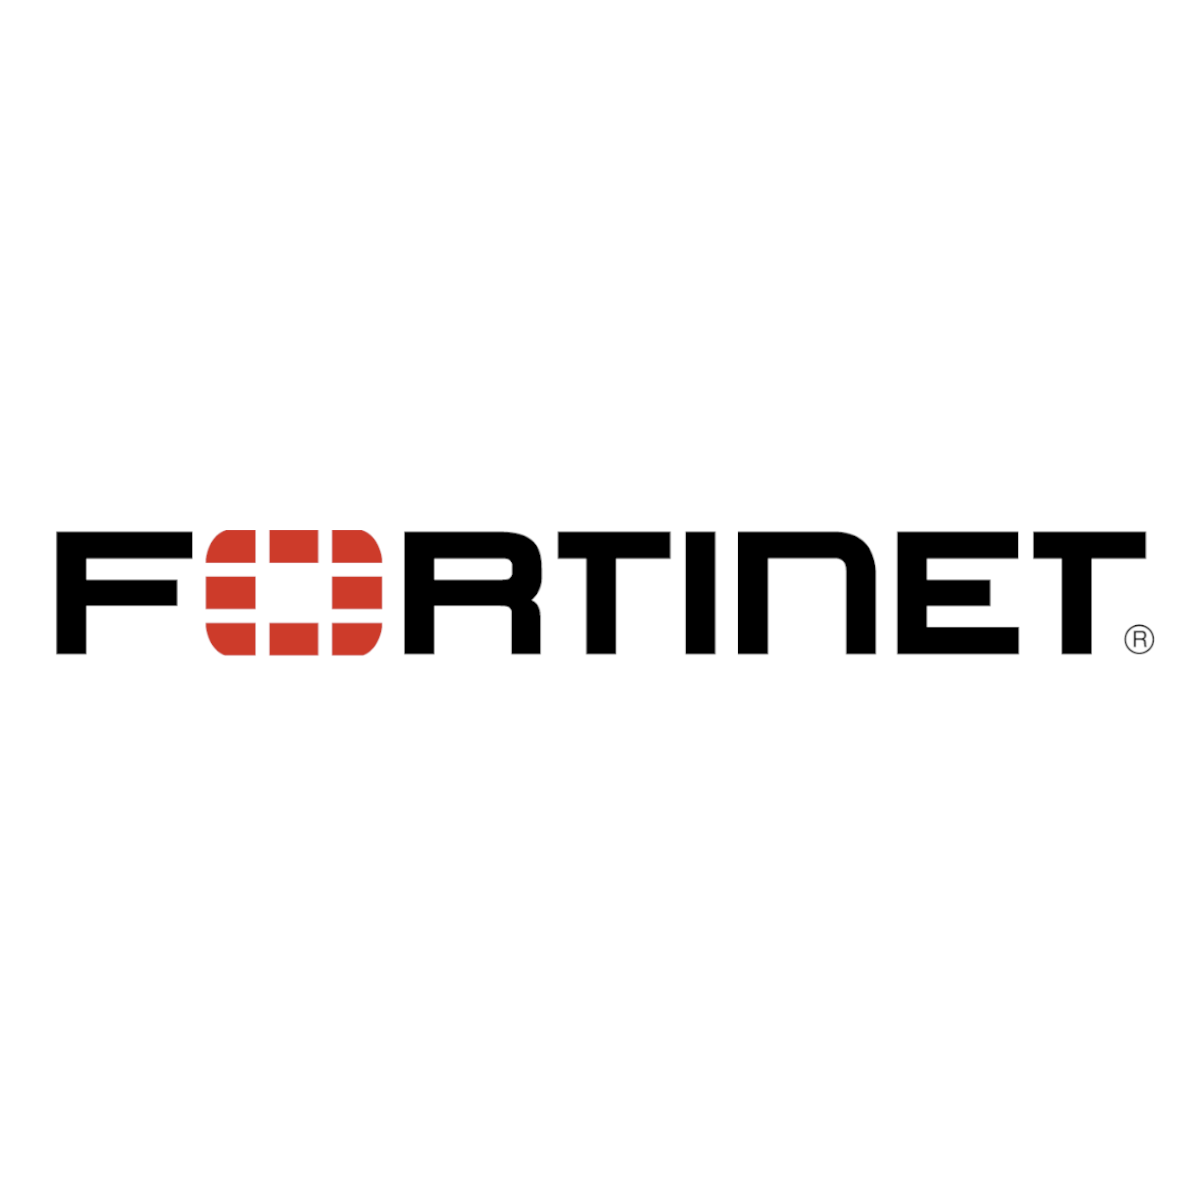 fortinet-kwadrat-1200.png